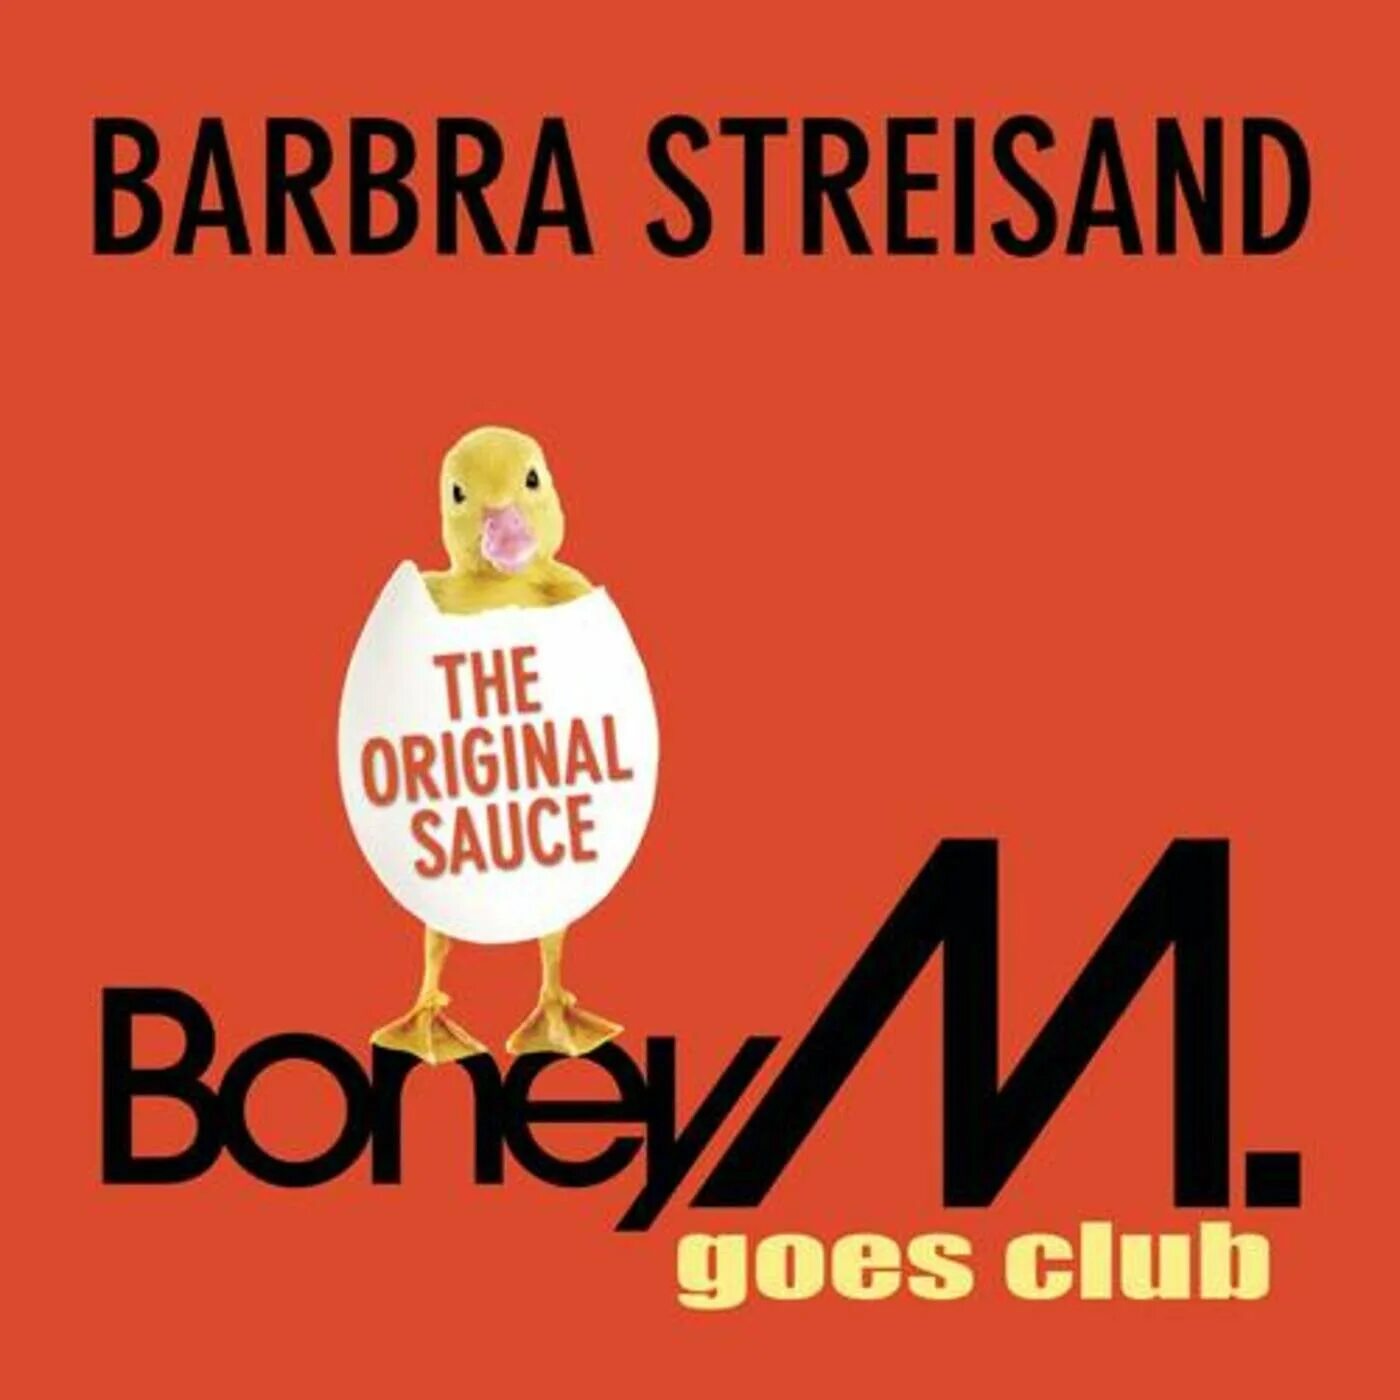 Boney m Barbra Streisand. Marilyn Monroe vs Barbra Streisand Boney m.. Duck Sauce Barbra Streisand. Barbra Streisand - Boney m. Mega Mashup-Mix - обложки альбомов.